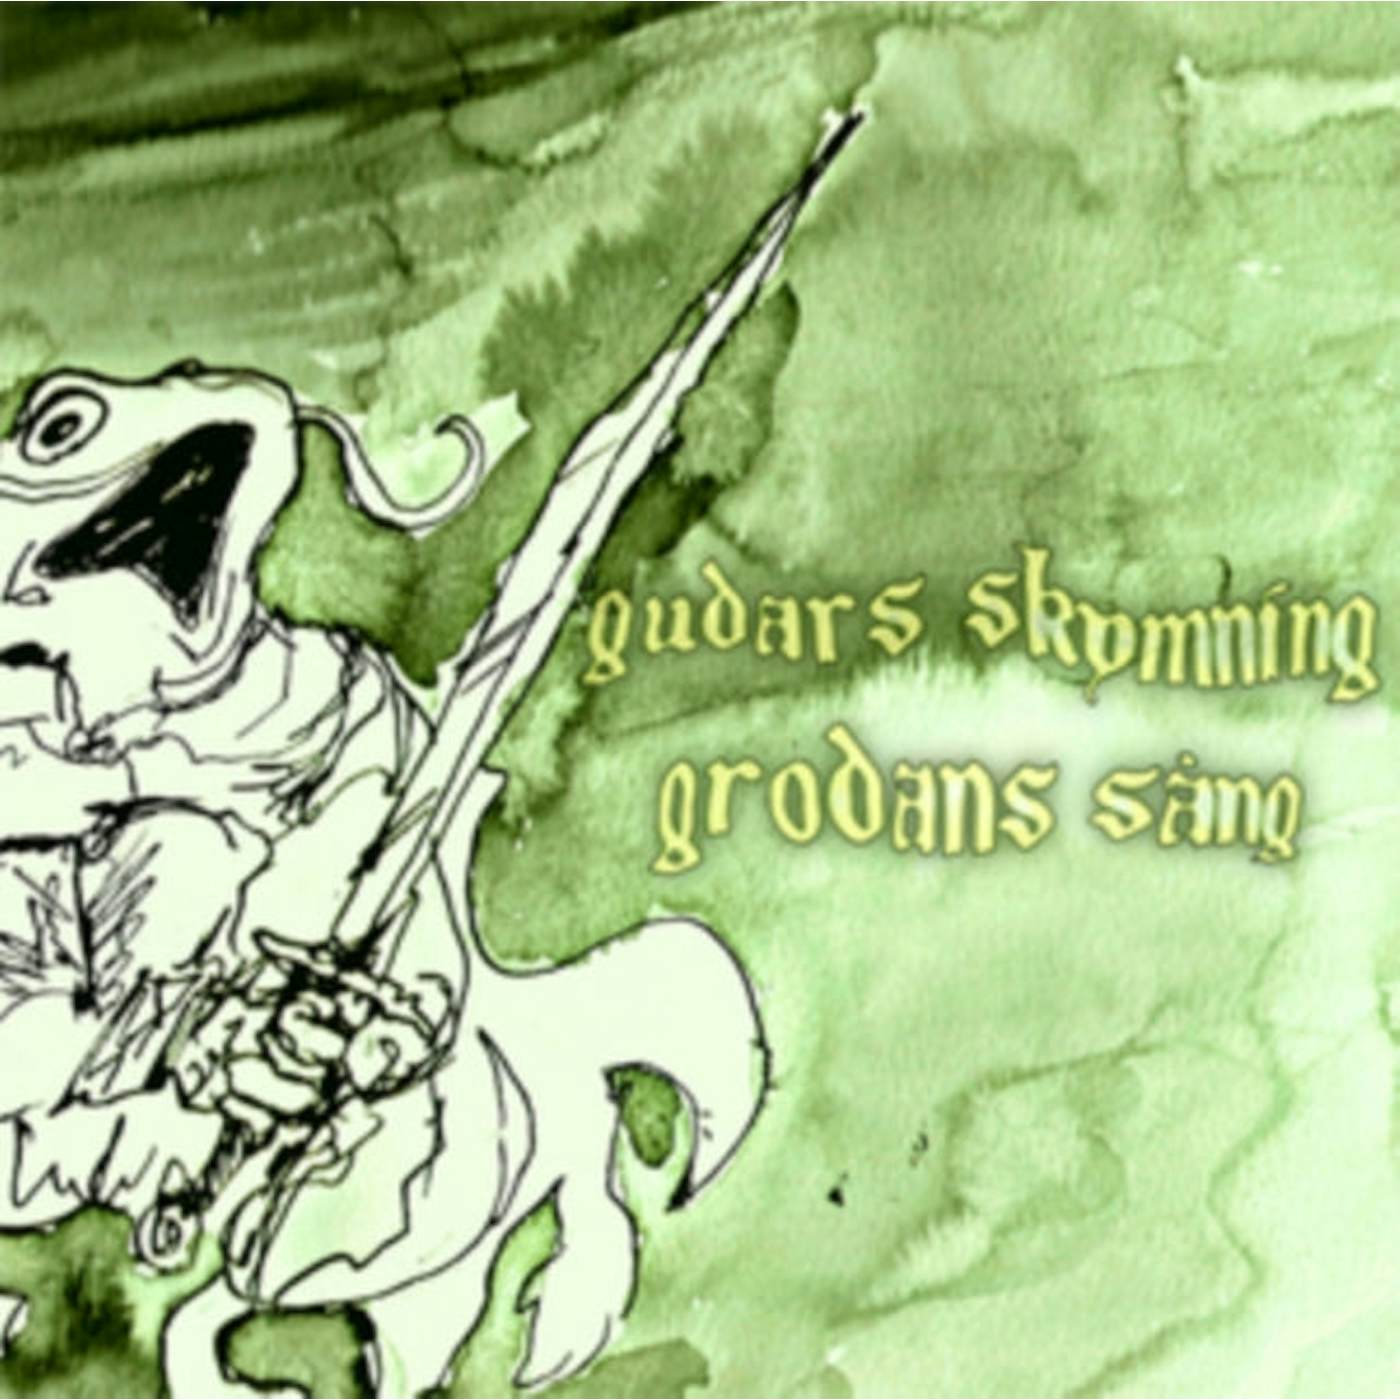 Gudars Skymning LP - Grodans Sång (Vinyl)